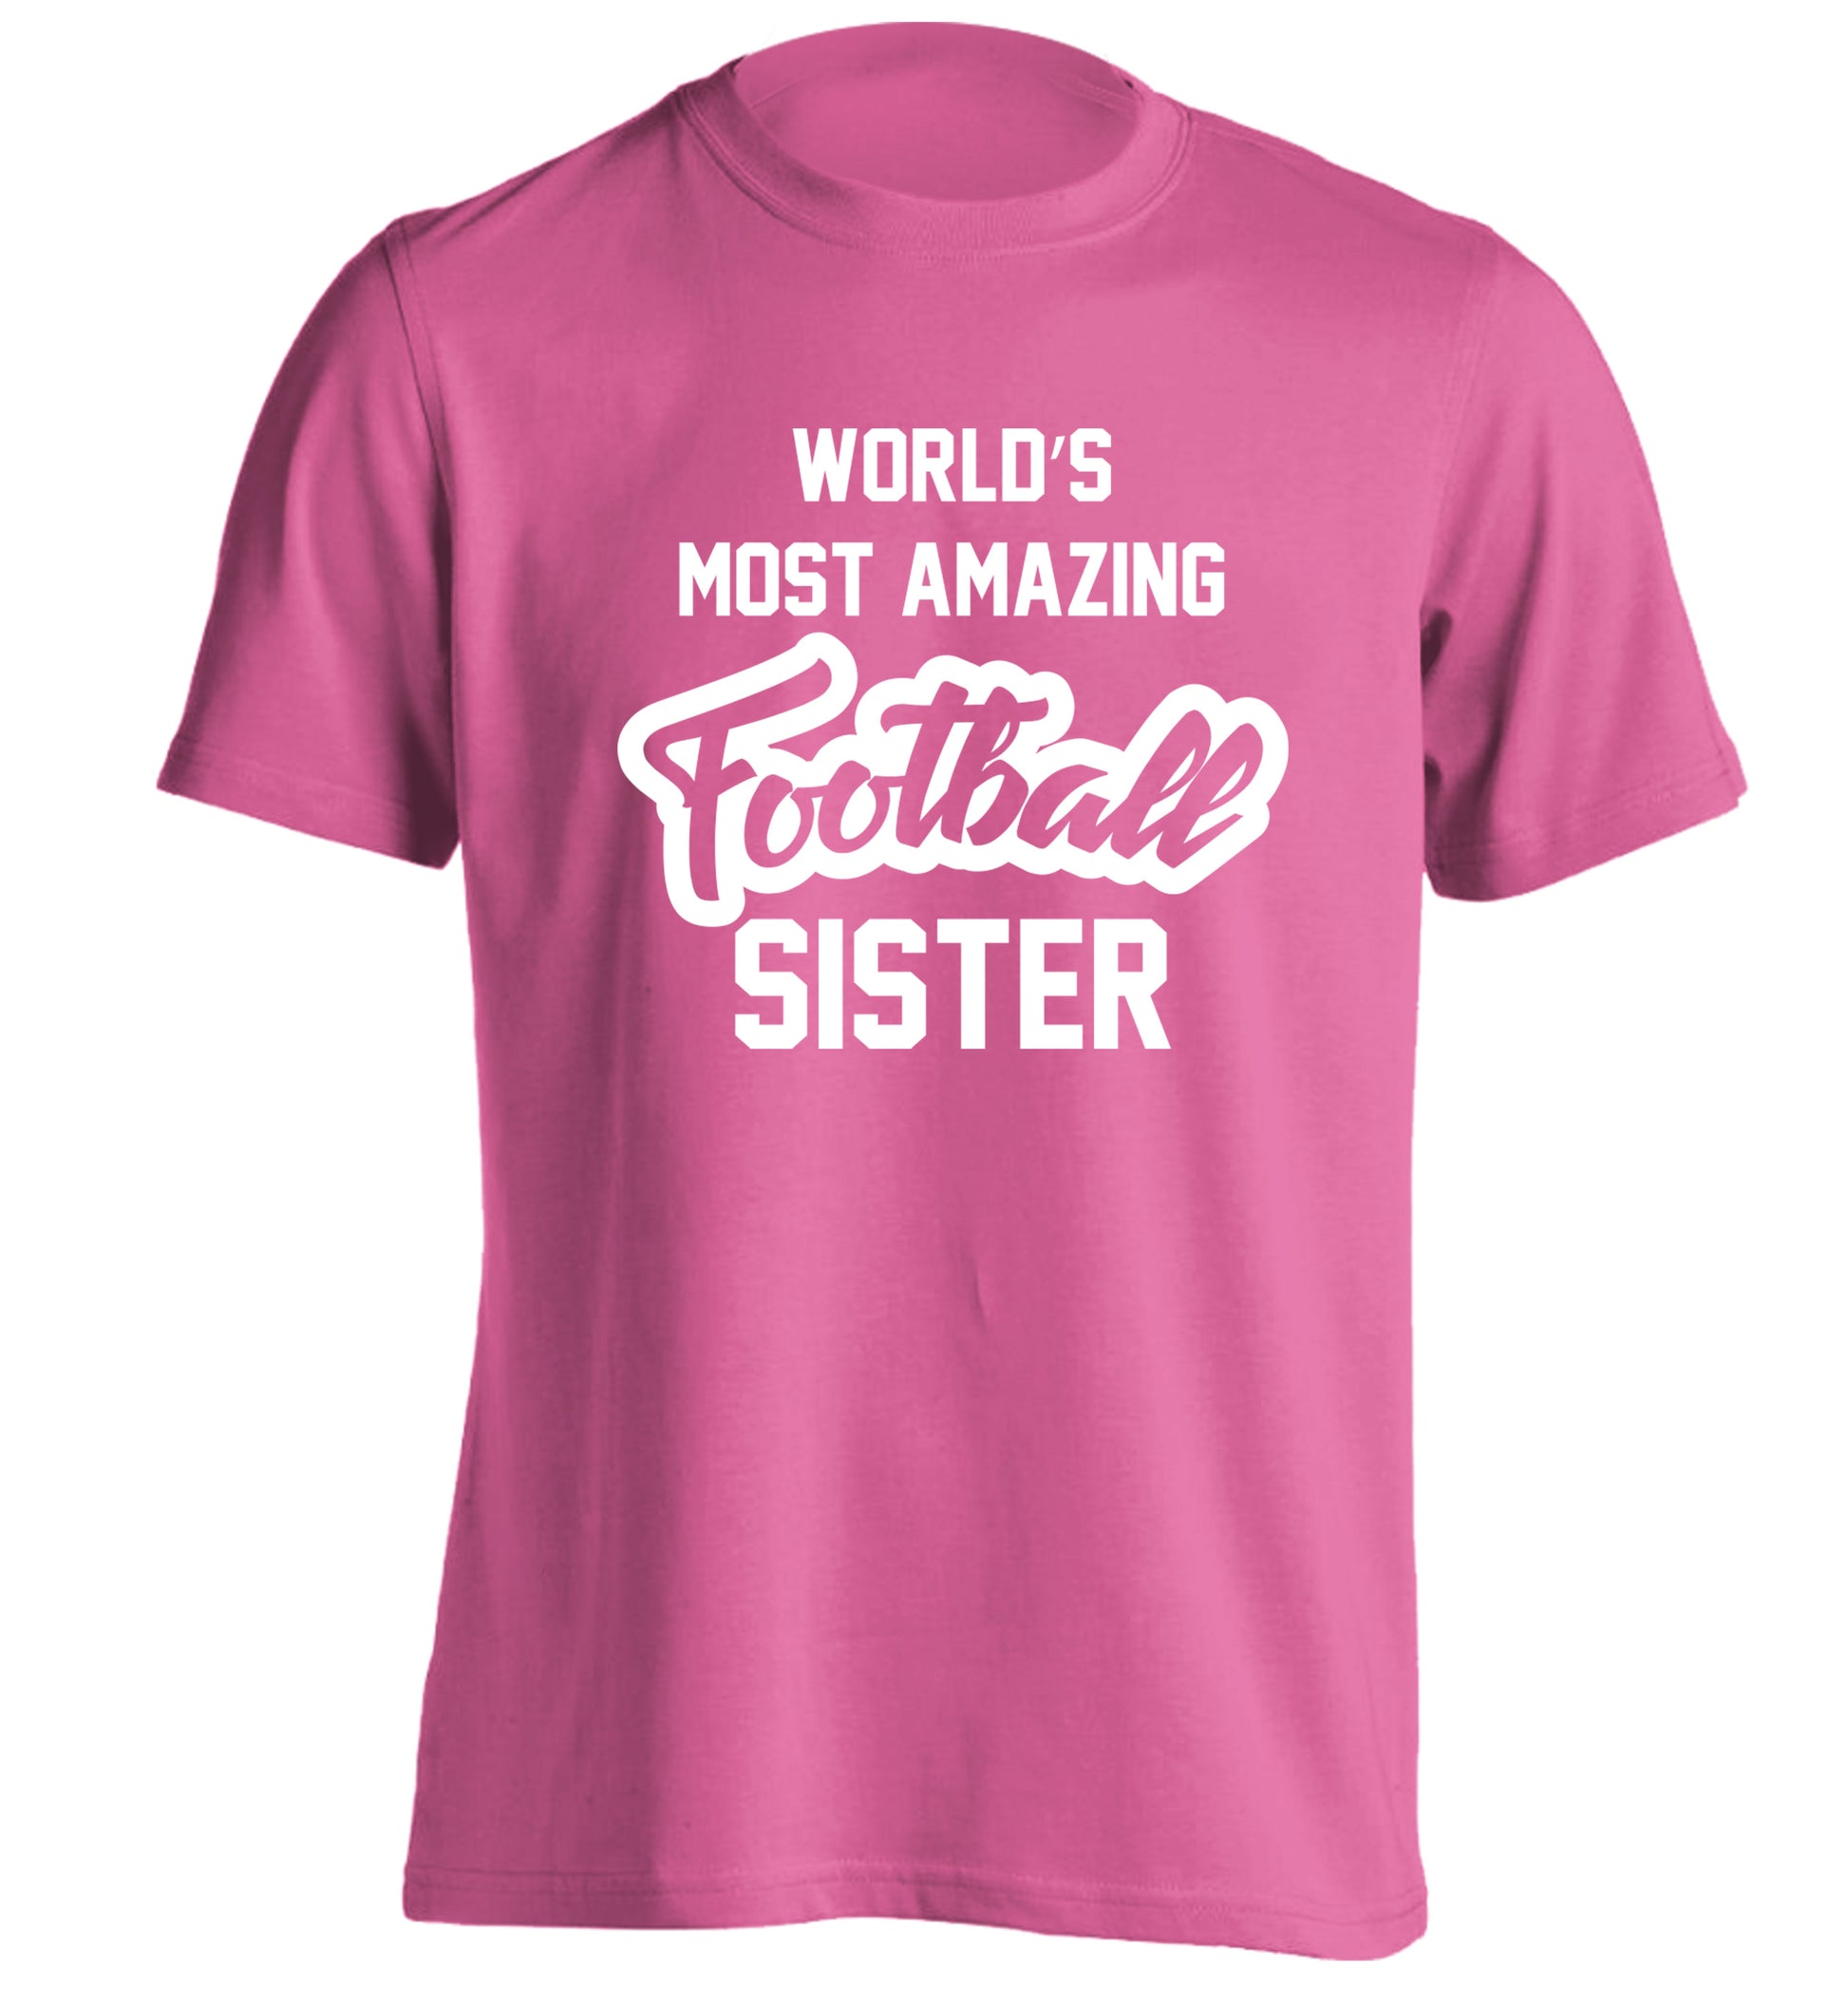 Worlds most amazing football sister adults unisexpink Tshirt 2XL